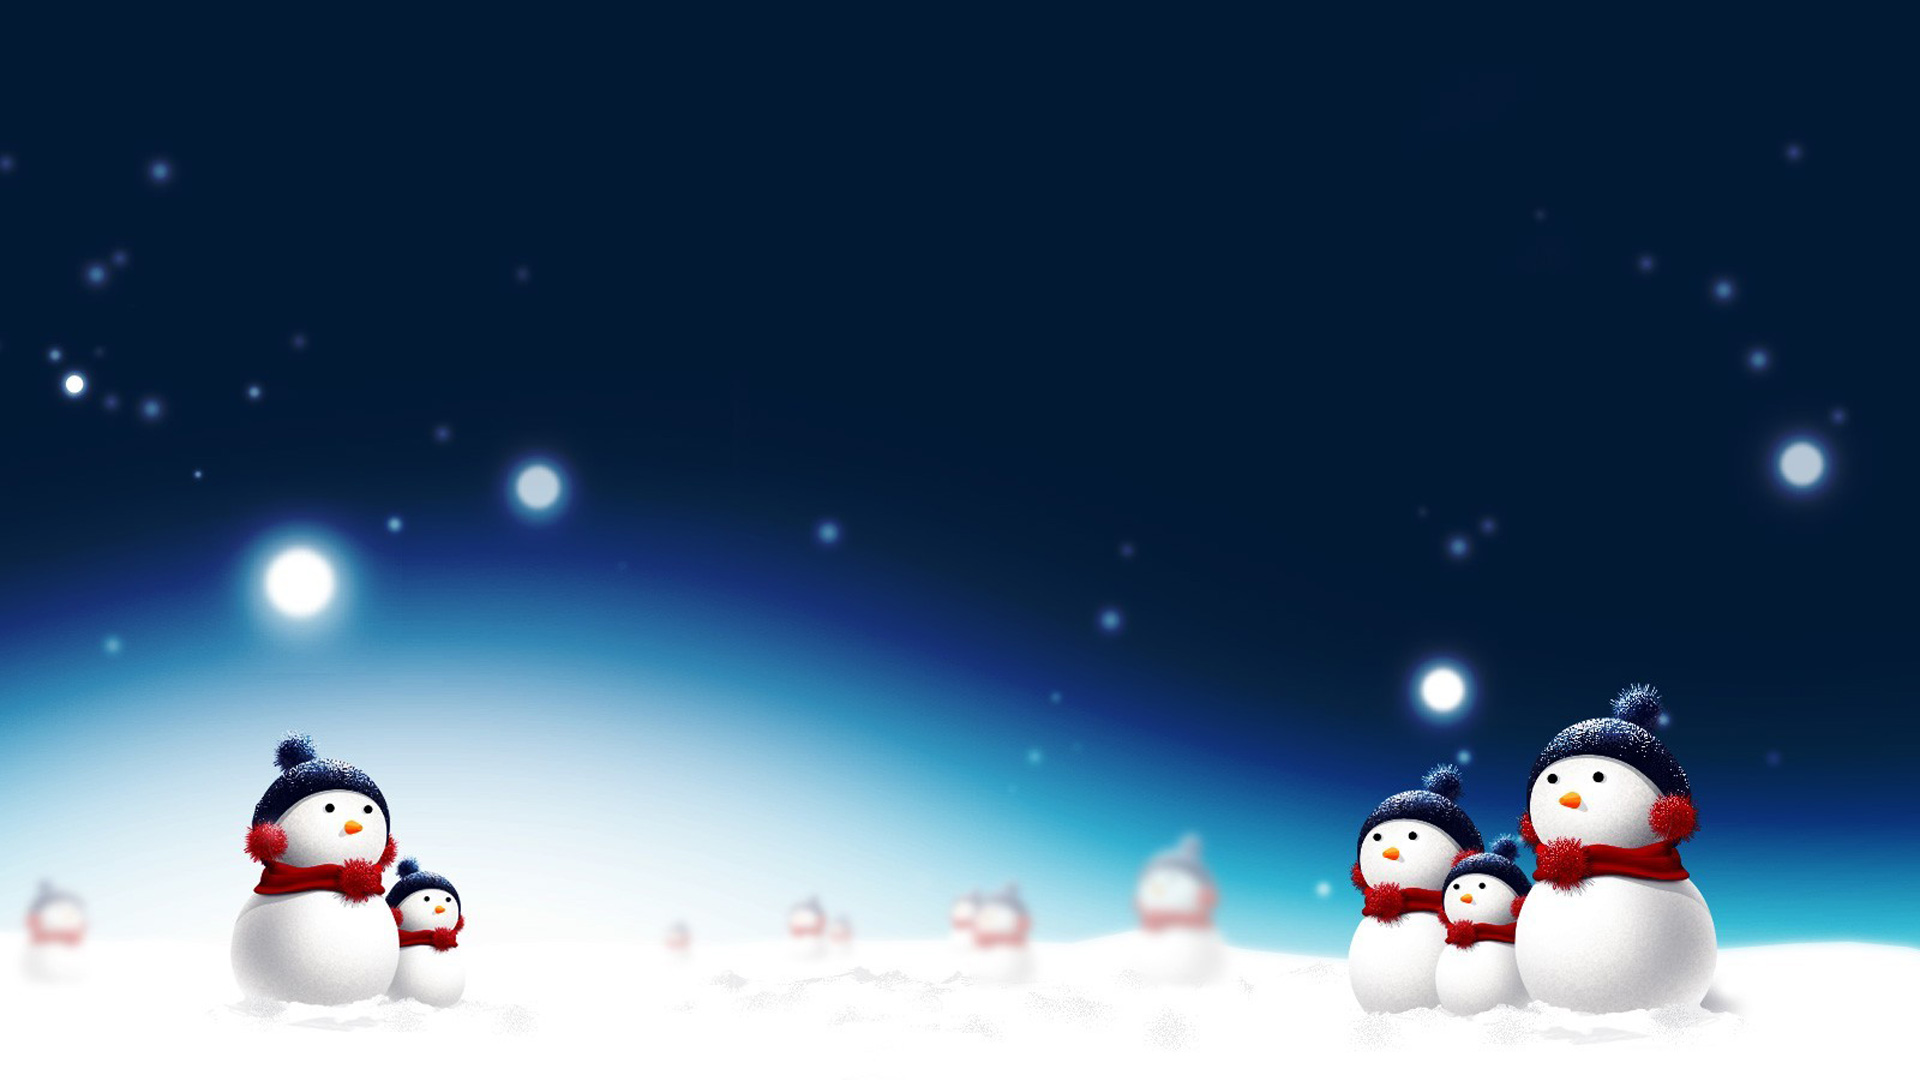 Snowman In Christmas Night